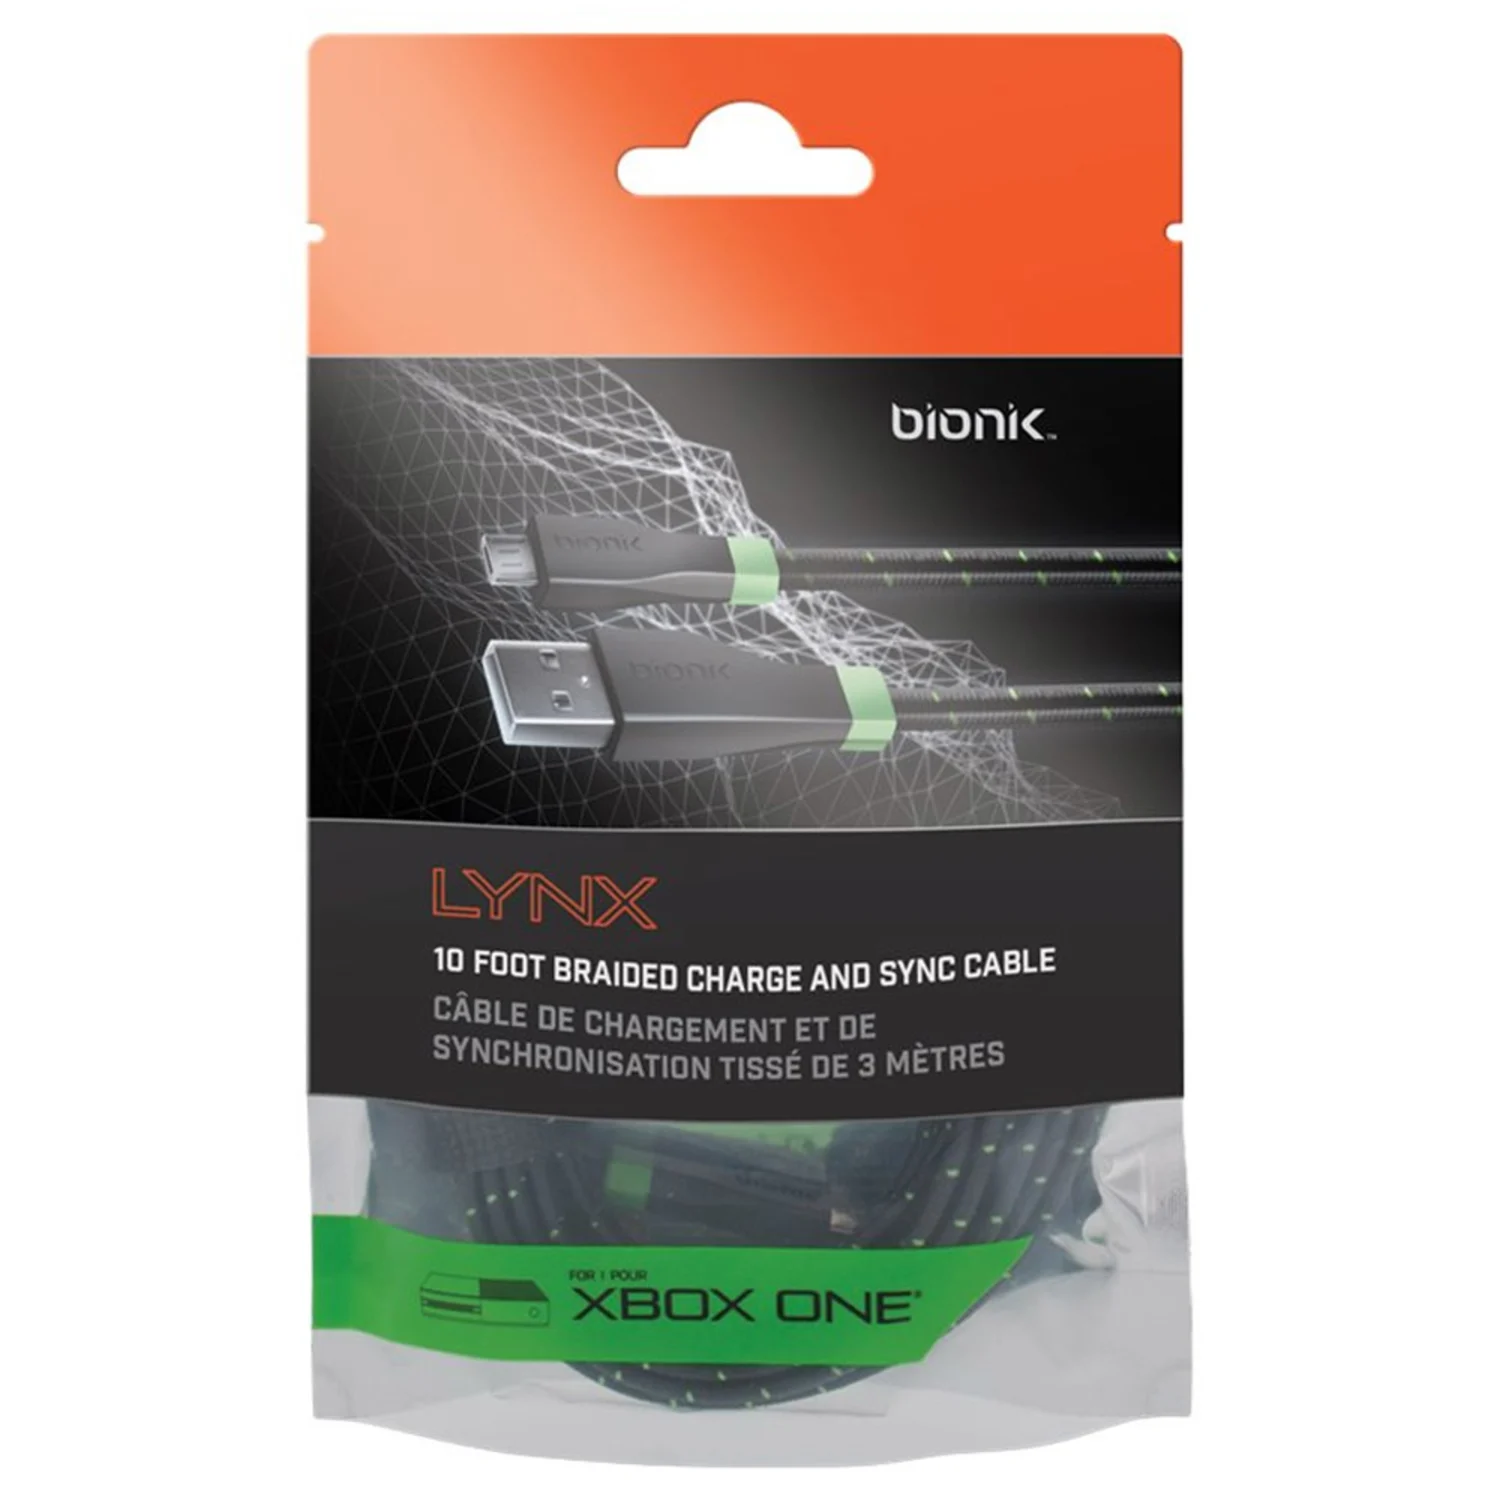 Cabo para Xbox One Lynx Bionik - preto e verde (BNK-9012)